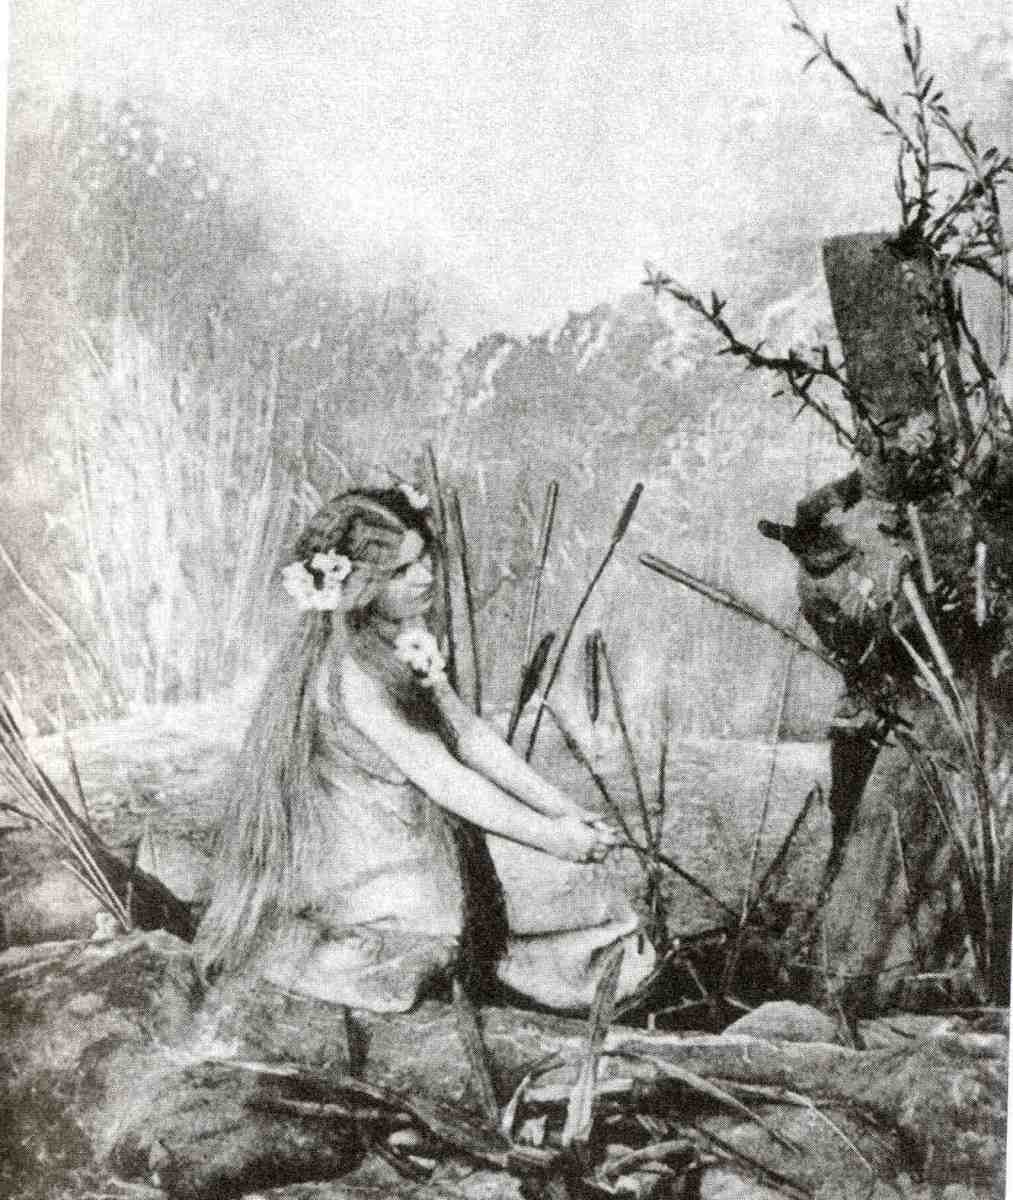 Růžena Maturová, the first woman to sing Dvorak's Rusalka